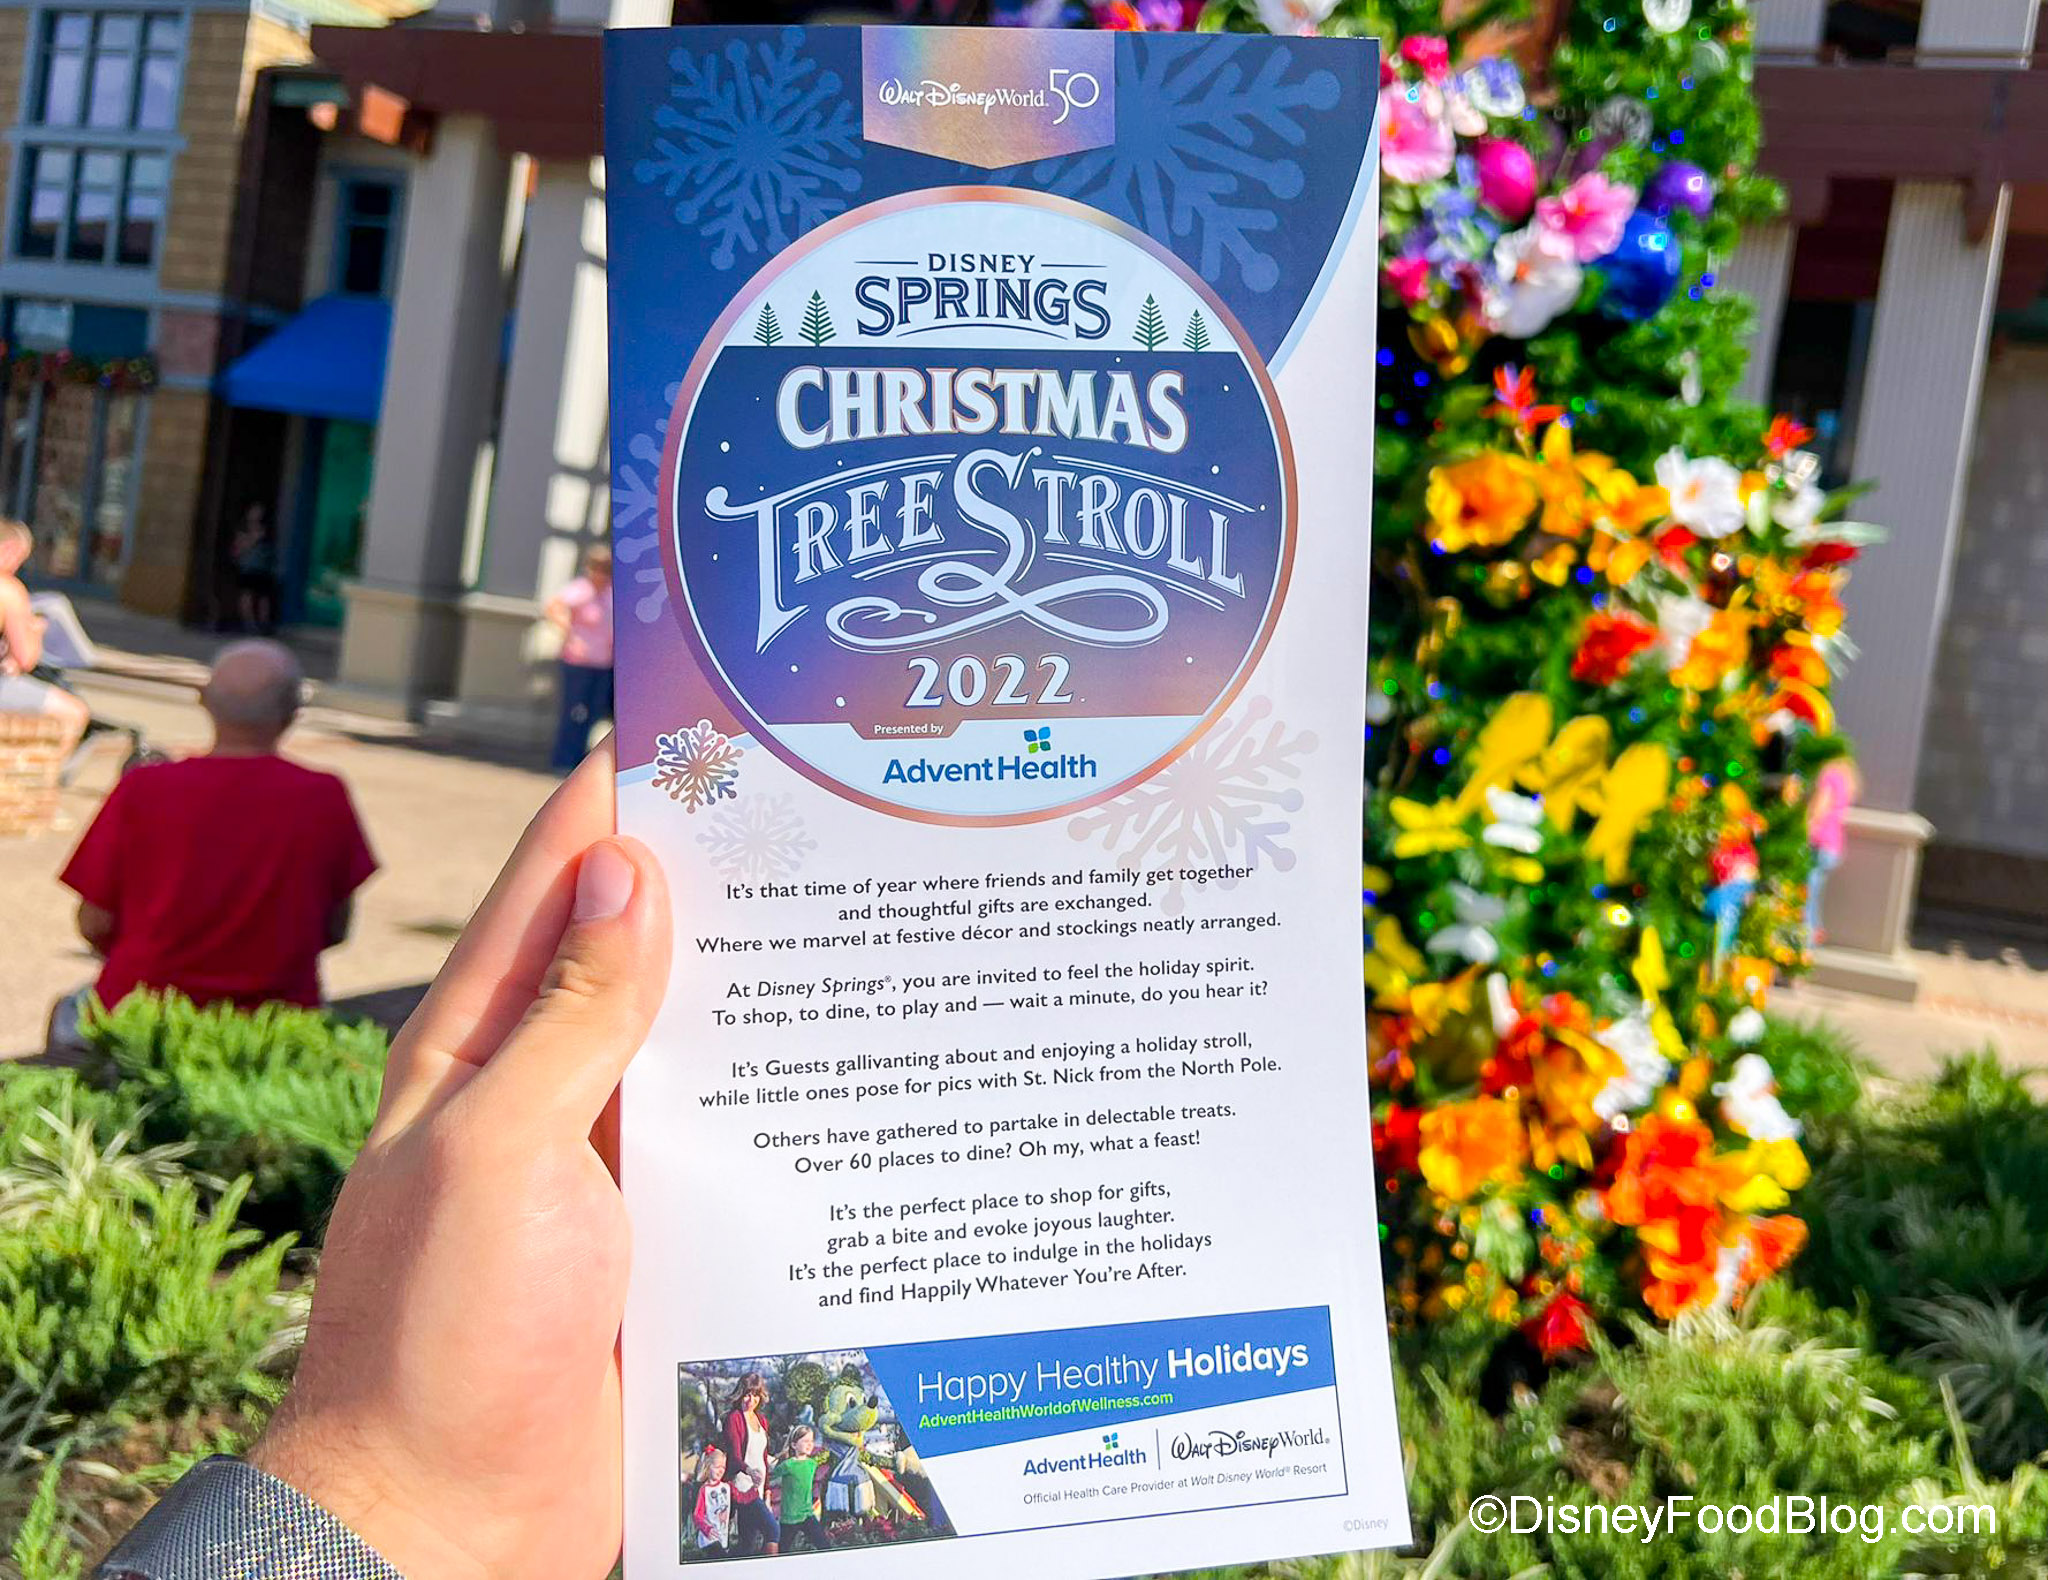 PHOTOS & VIDEOS The Christmas Tree Stroll Has Returned to Disney